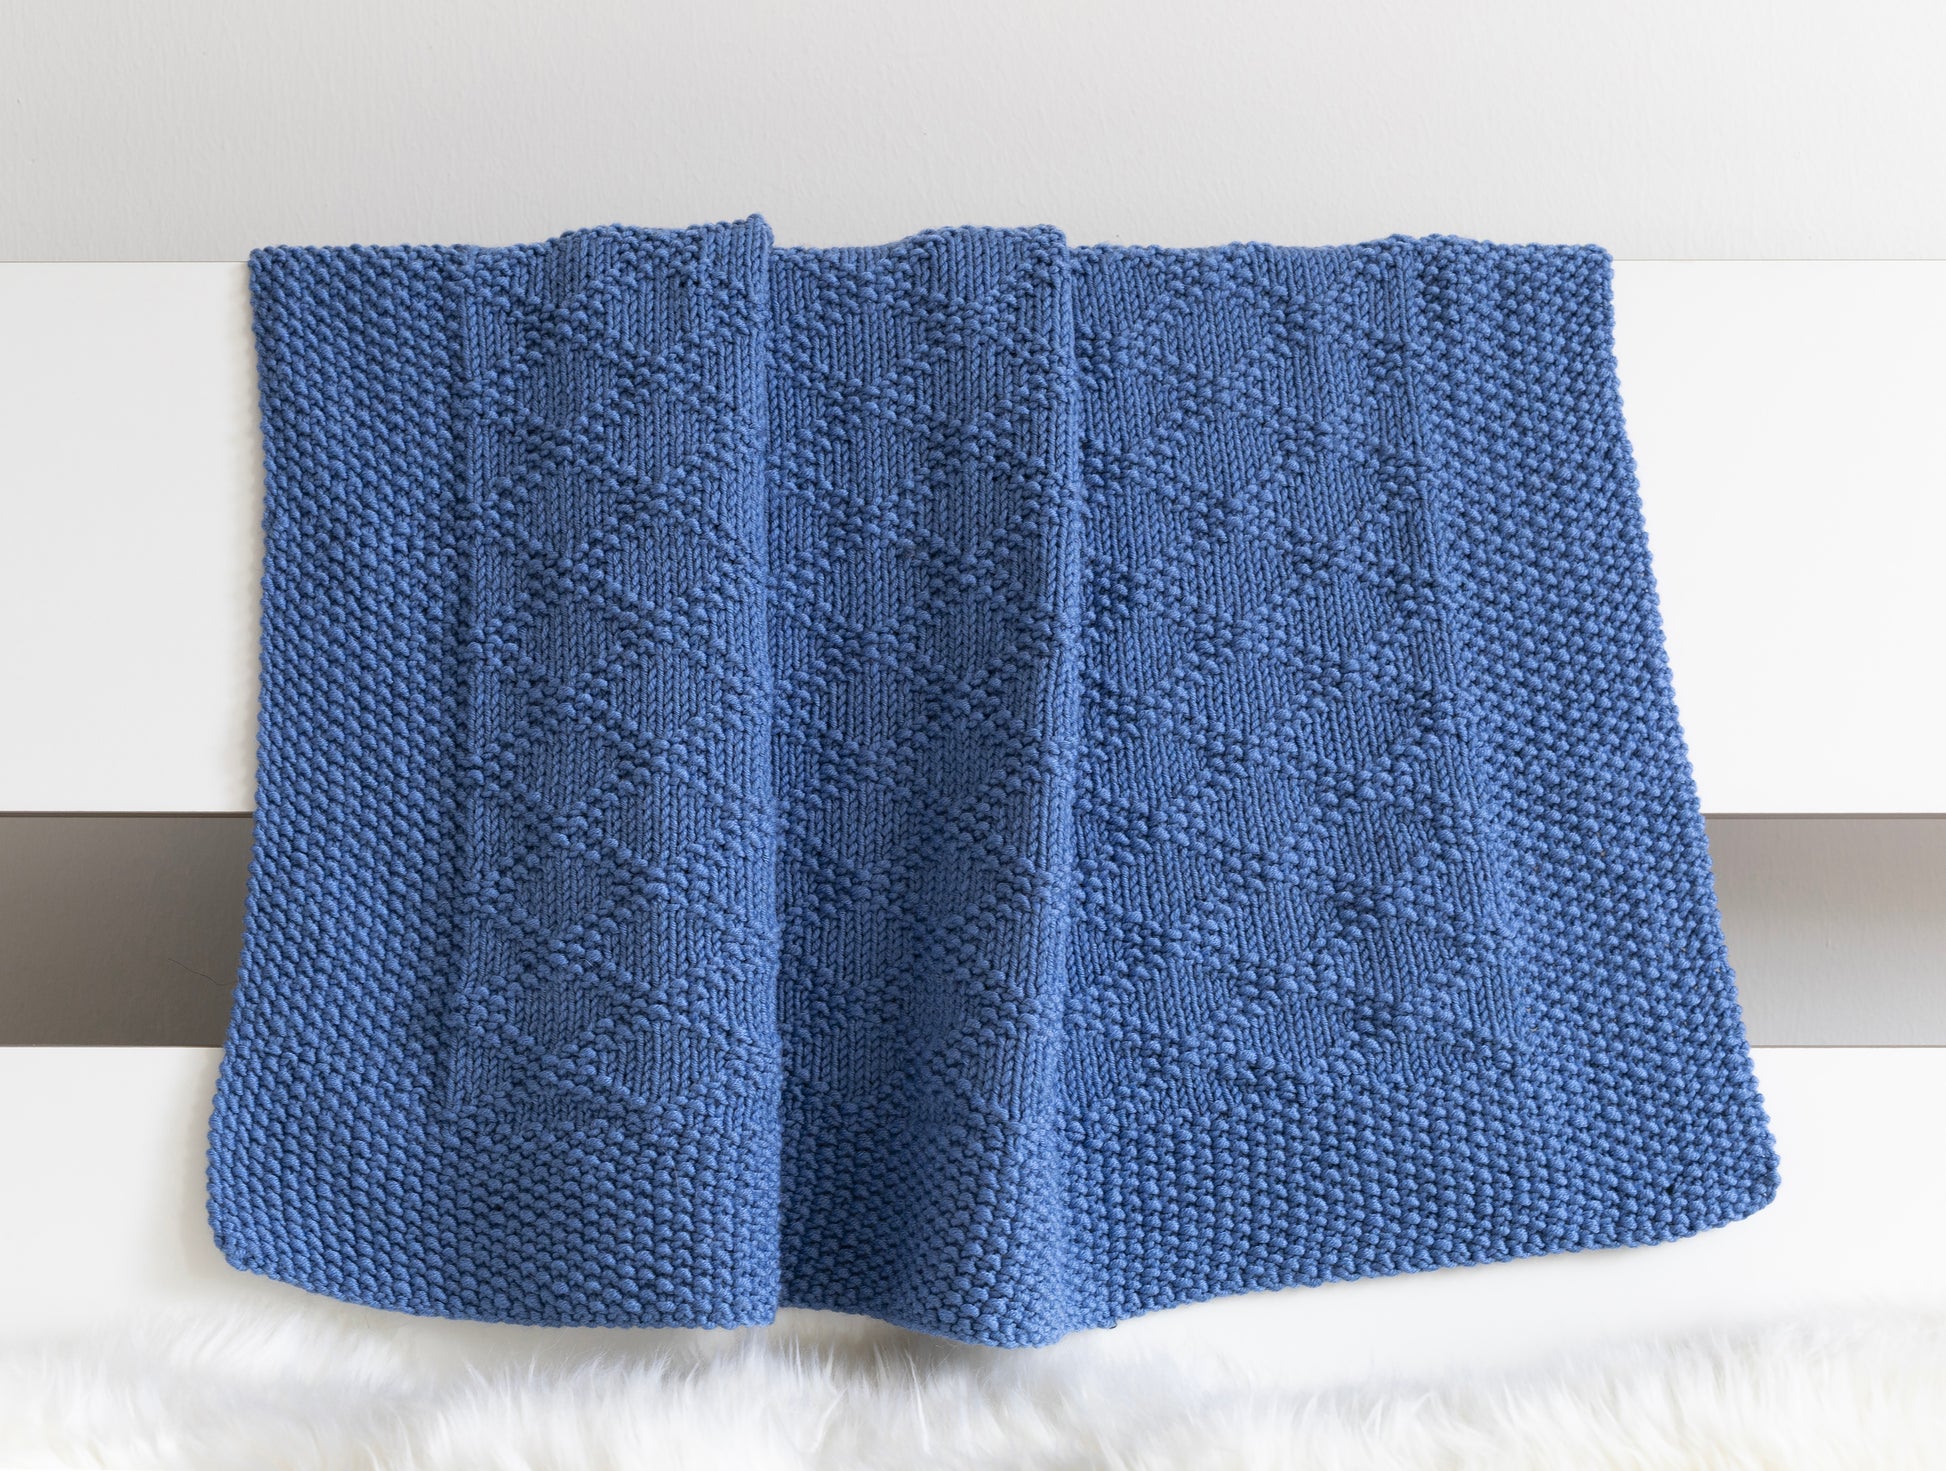 Blue merino wool hand-knitted baby blanket in Charles Brocade knitting pattern